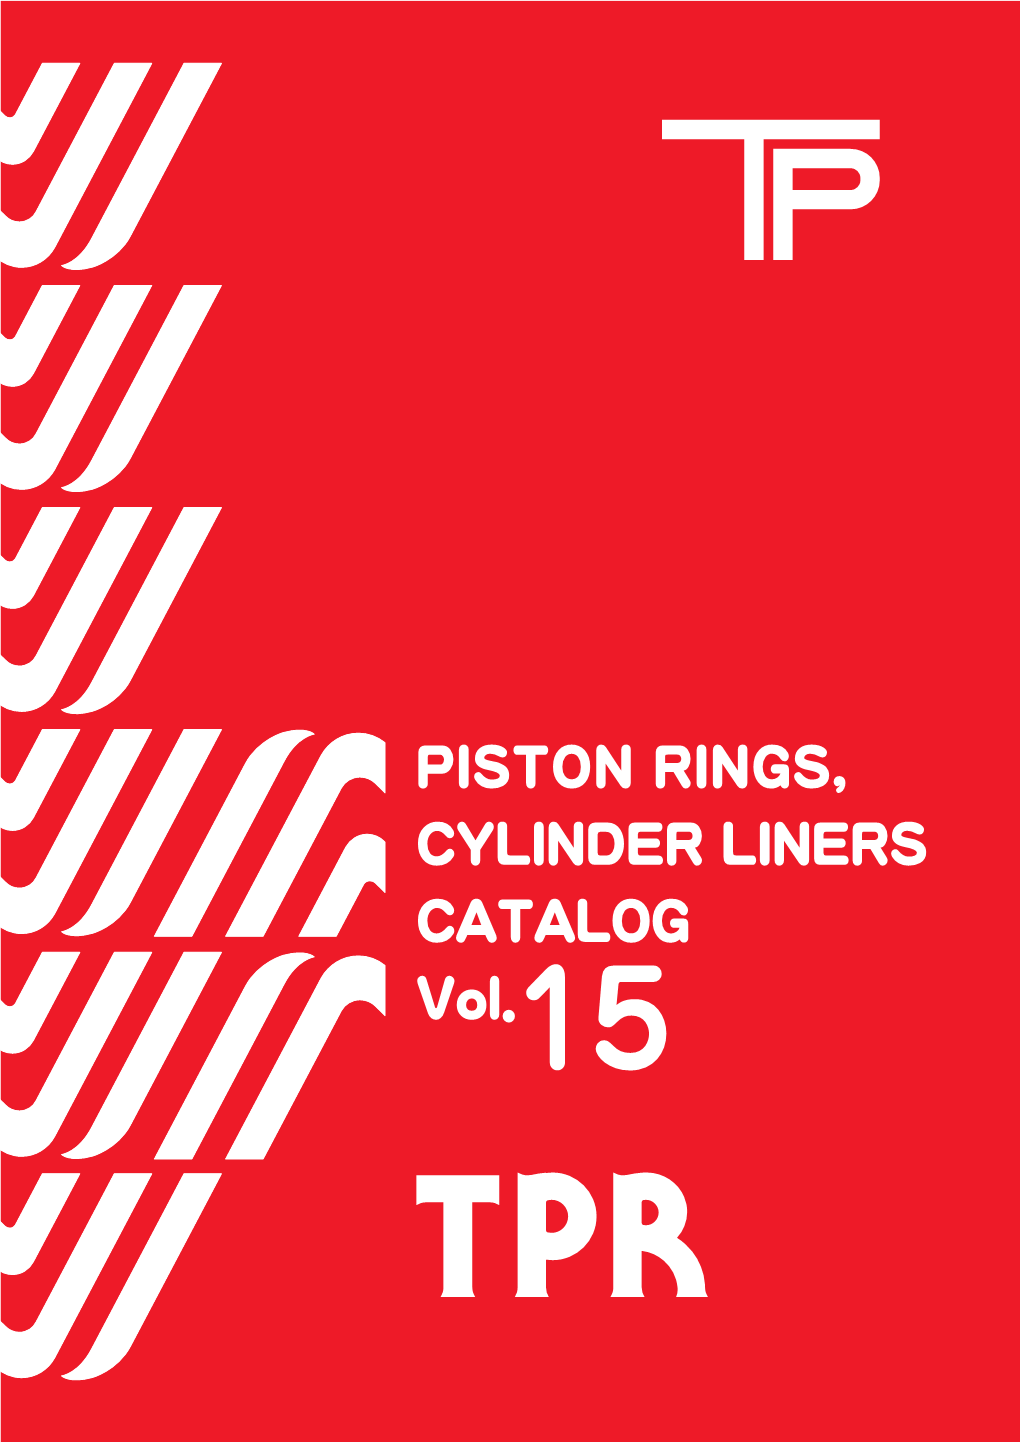 How to Order TP Piston Rings ...2 PISTON